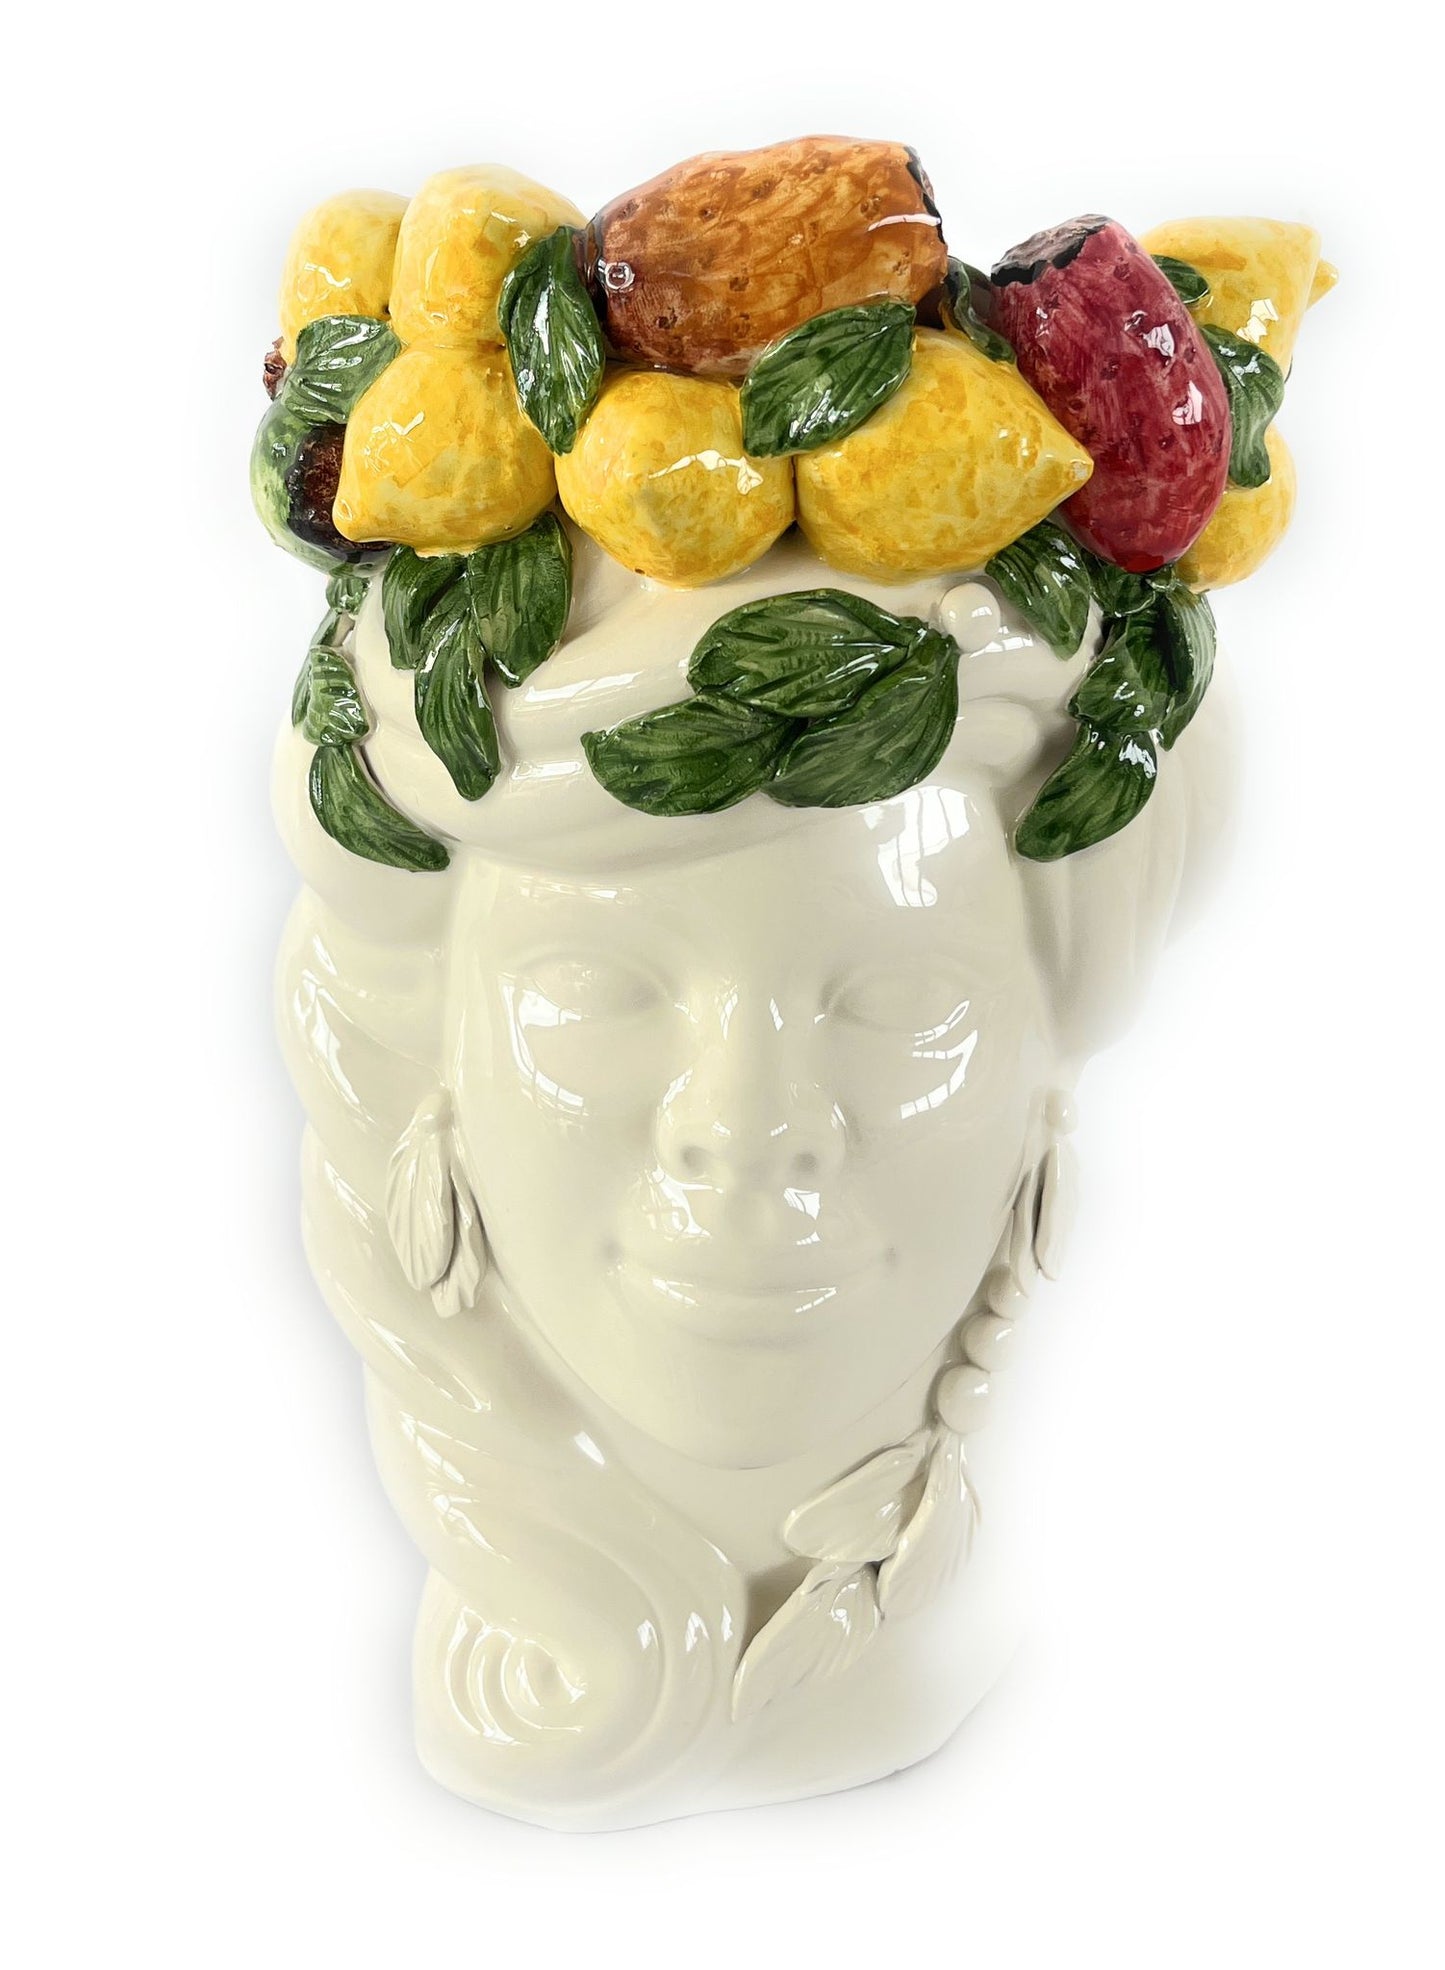 Verus Ceramiche by Abhika - Dark Brown - White Head with Lemons - Caltagirone Ceramic, 100% Made in Italy, height 33 cm